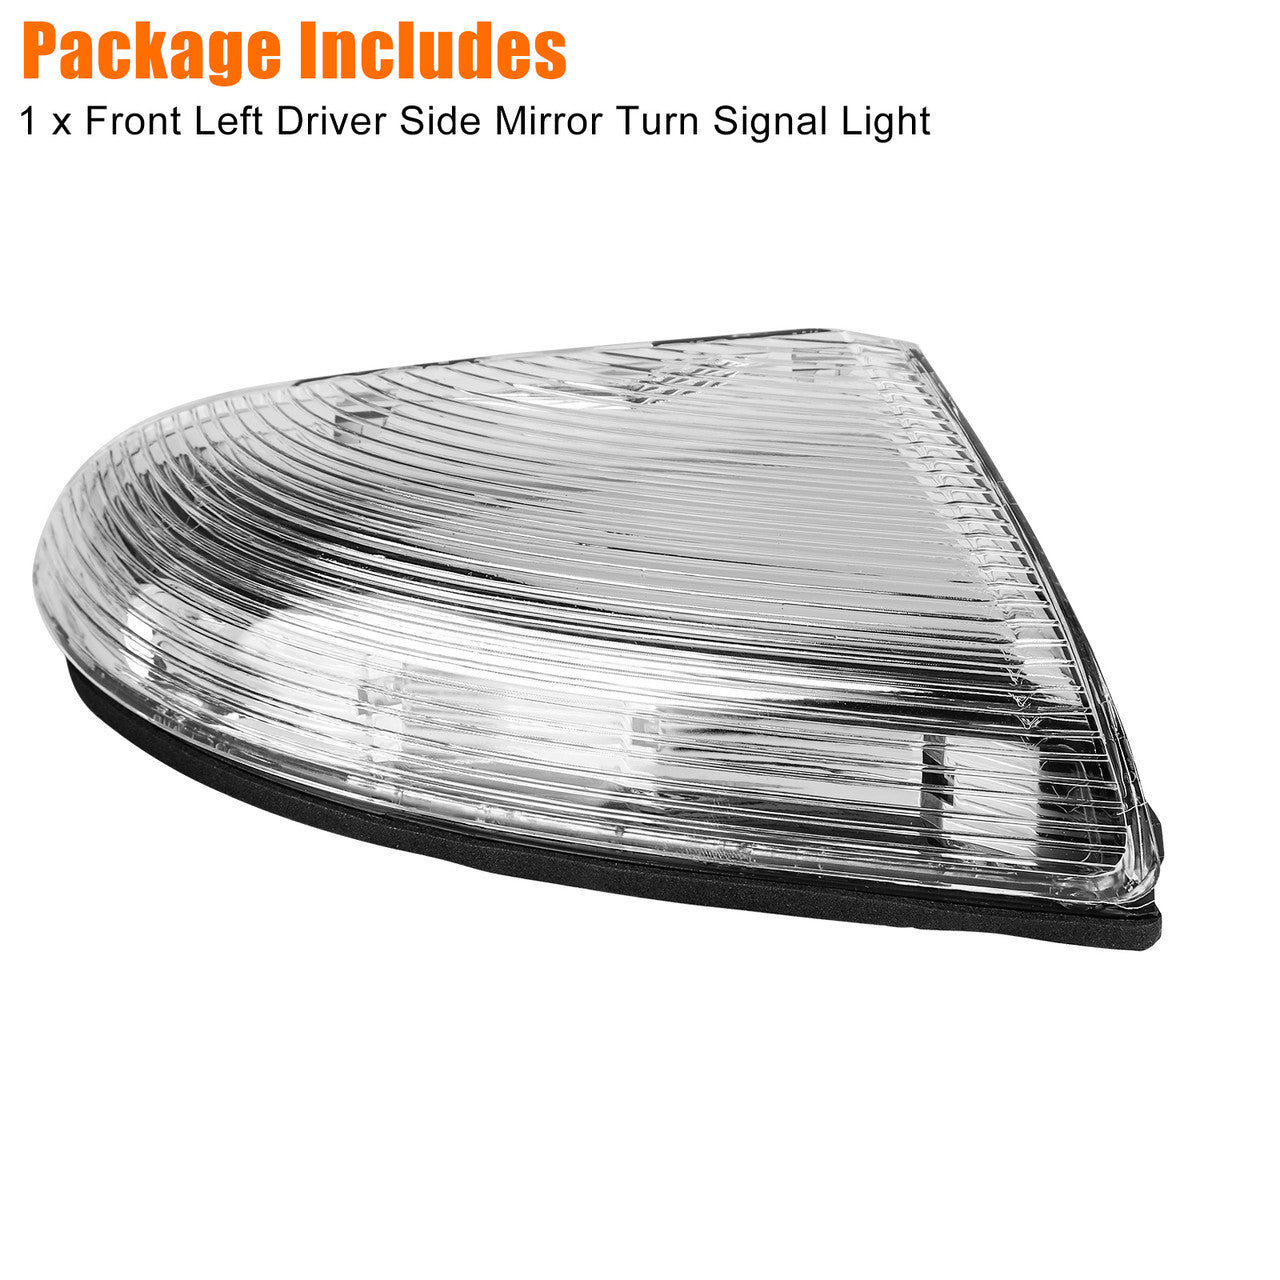 LED Left Side Mirror Turn Signal Lamp - For Dodge RAM 1500 2009-2018, 2500 2010-2018